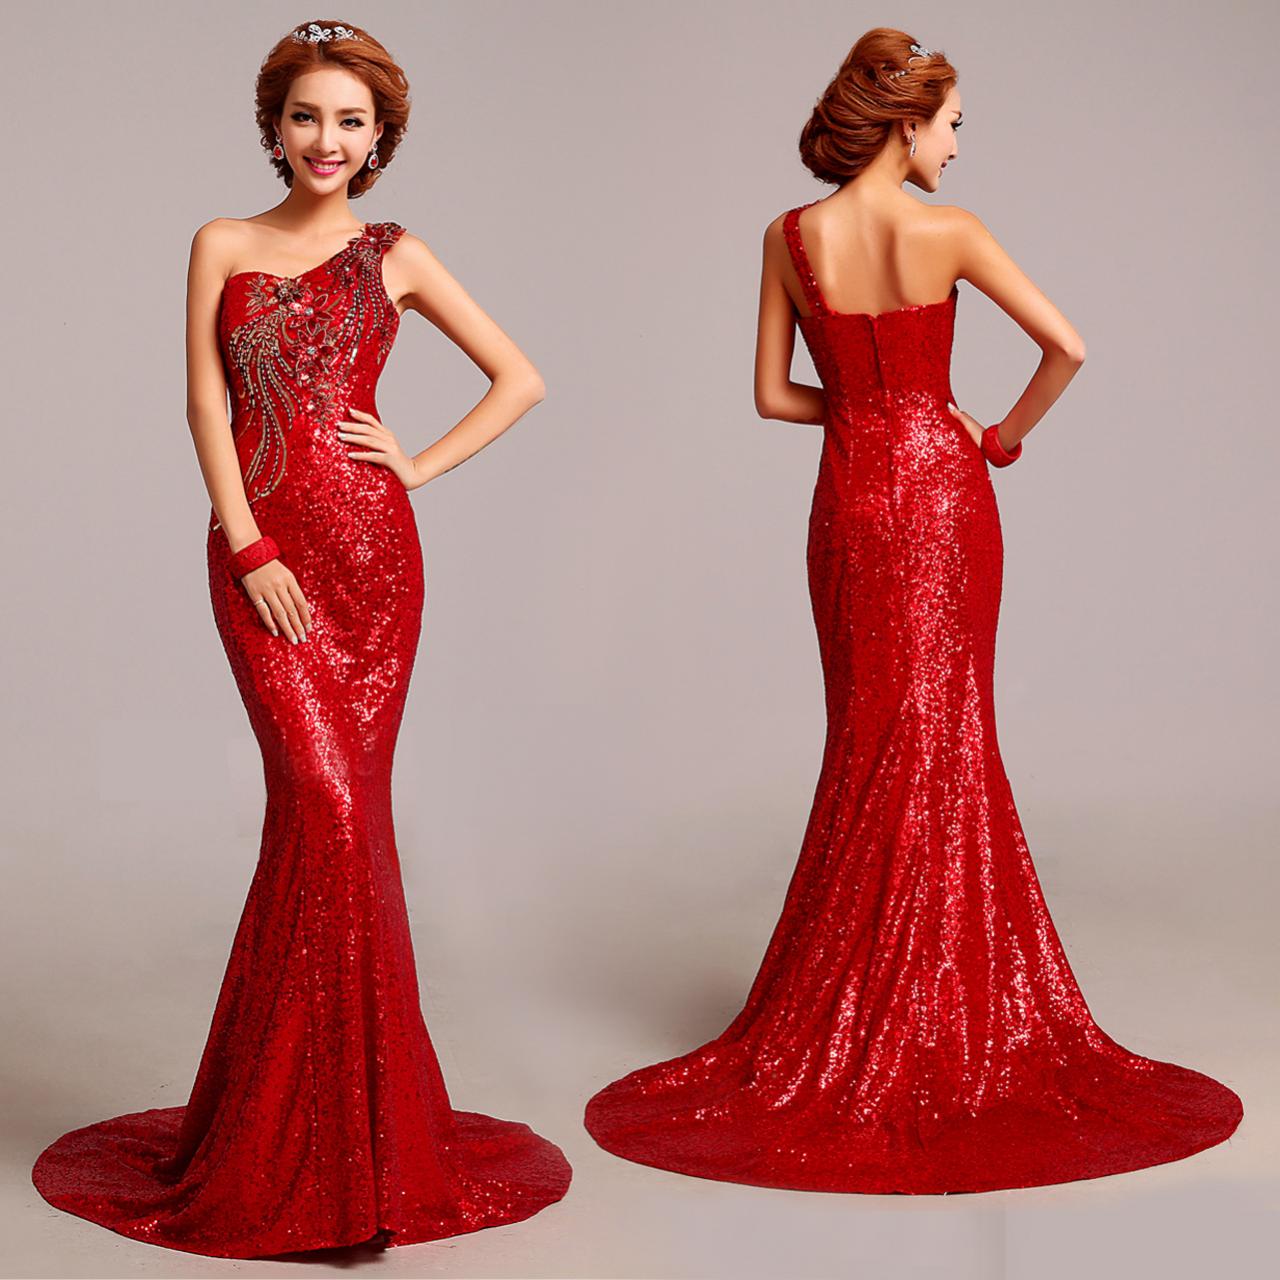 8992 7 اجمل فساتين حمراء - صور فساتين اعراس - صورة فستان احمر 2020 نجمه مدرك